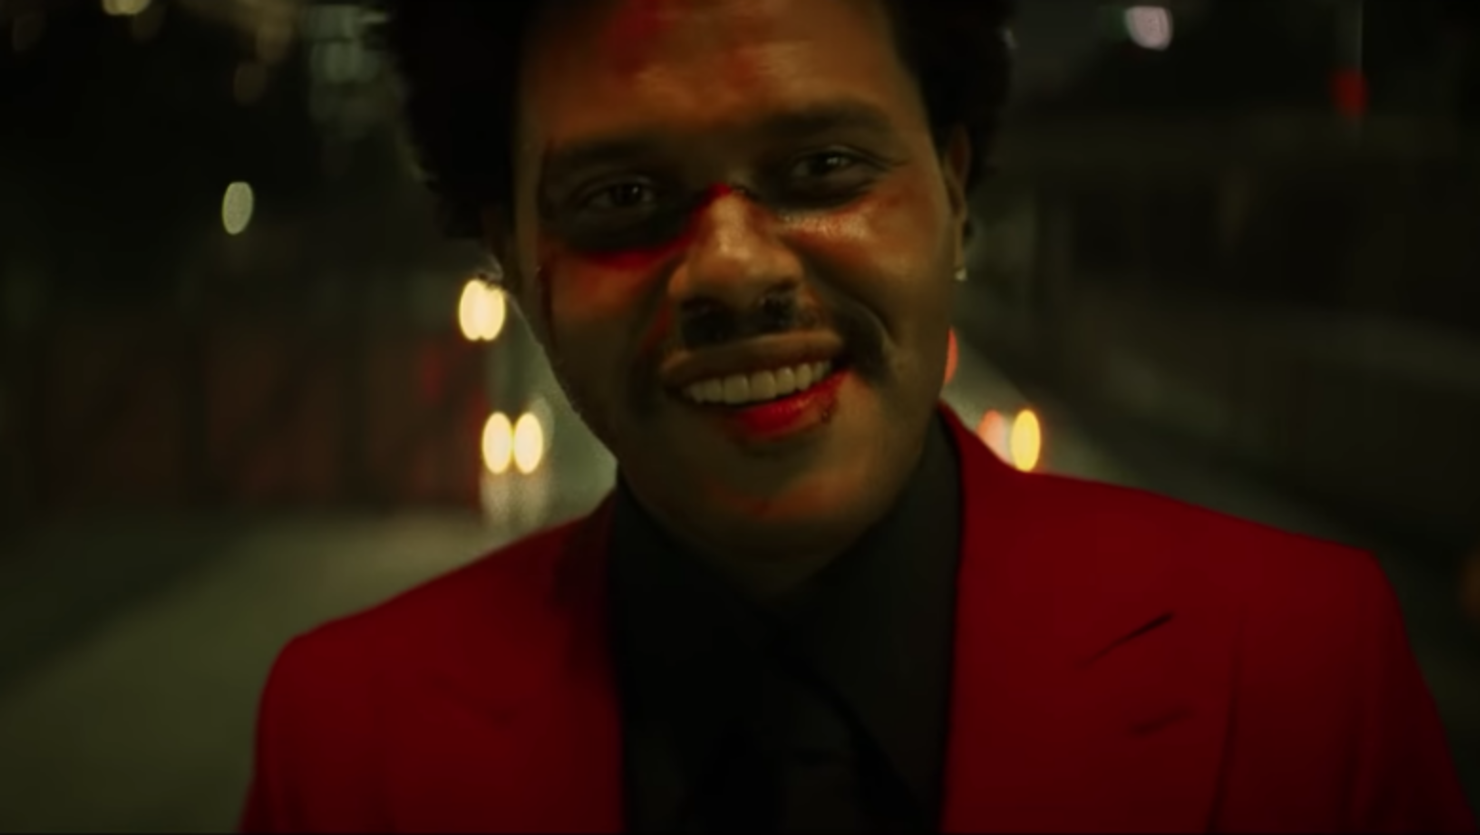 The Weeknd Channels Joker In Reckless Video 'Blinding Lights' | iHeart